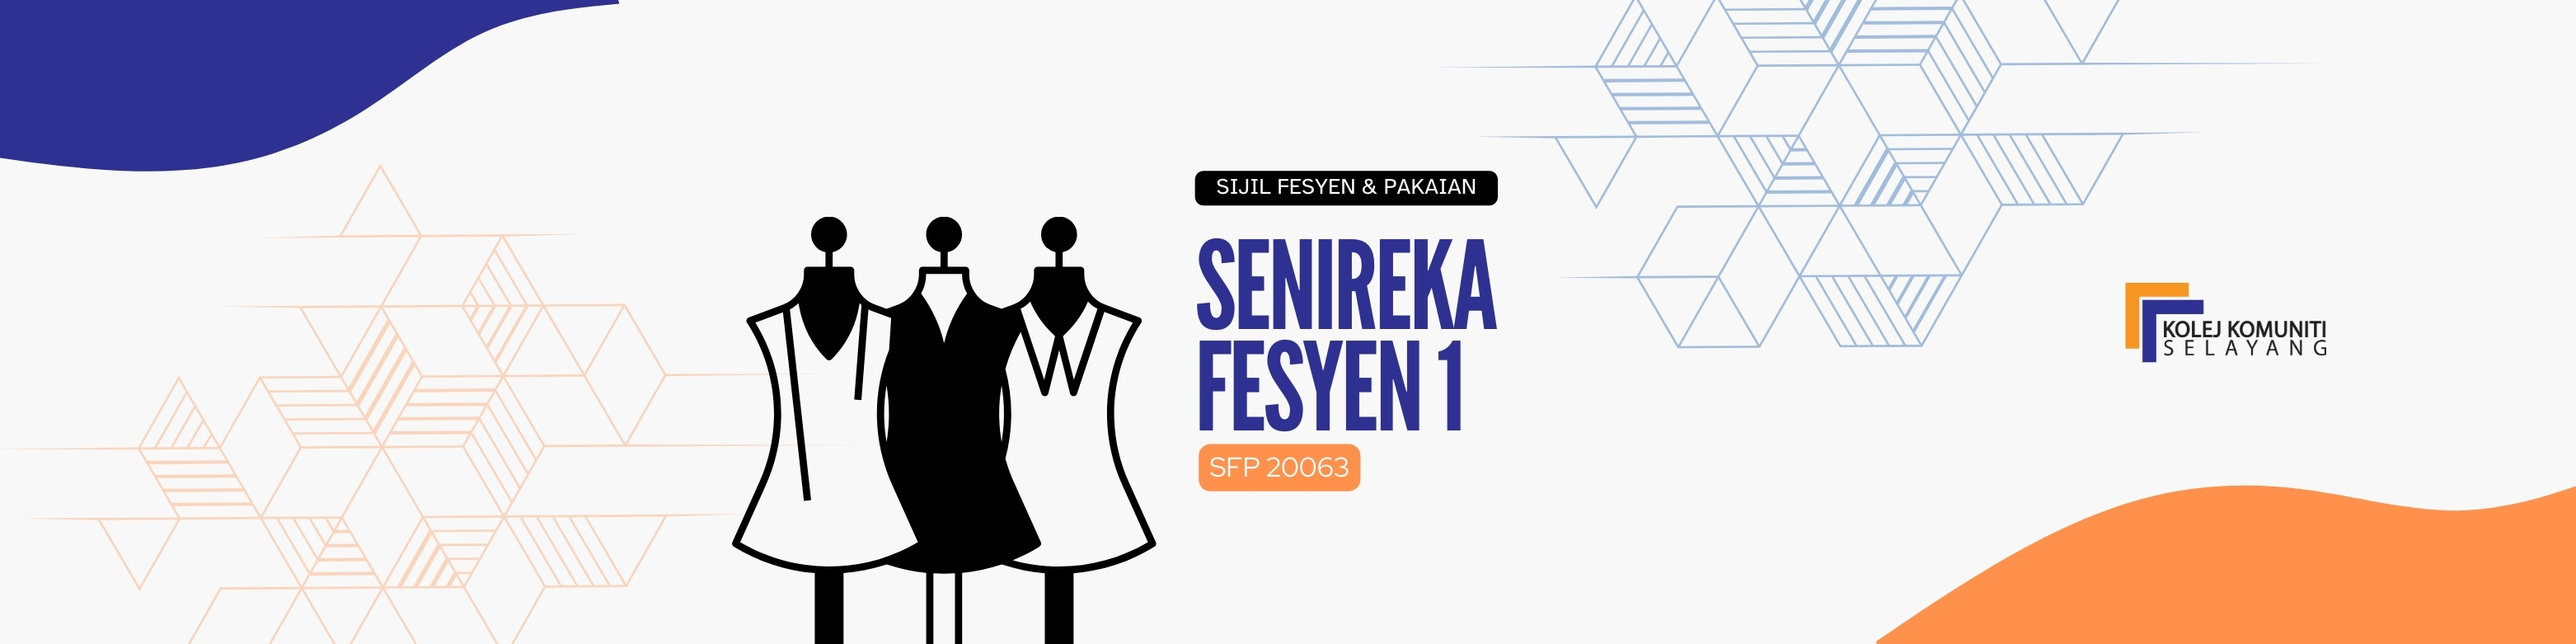 SFP20063 - SENIREKA FESYEN 1 